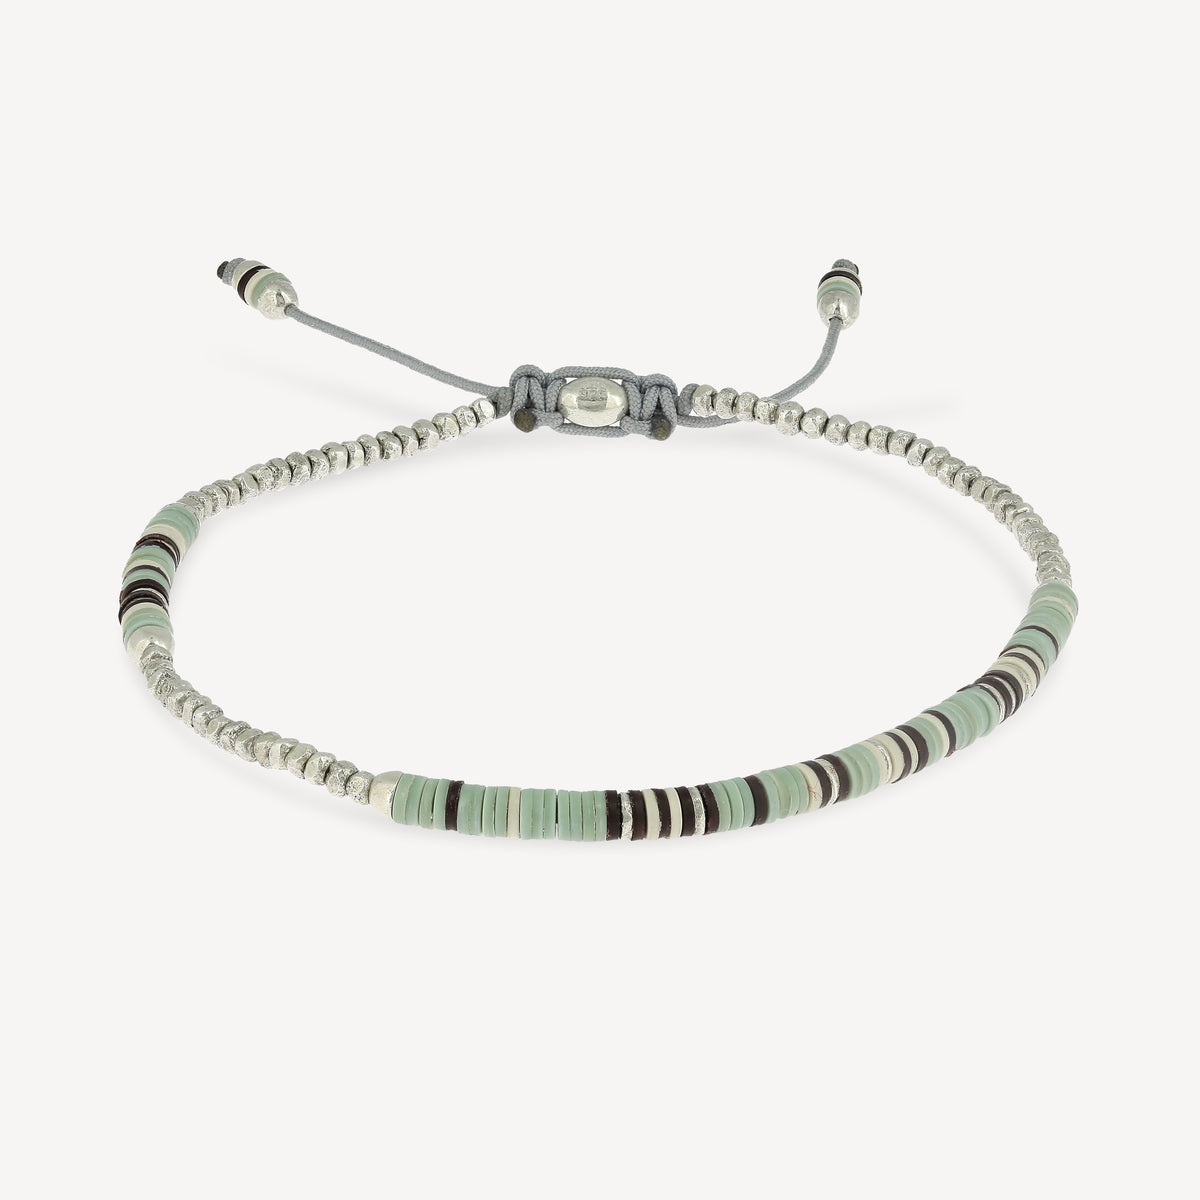 Volta 3 Turquoise Bracelet Pattern Beads